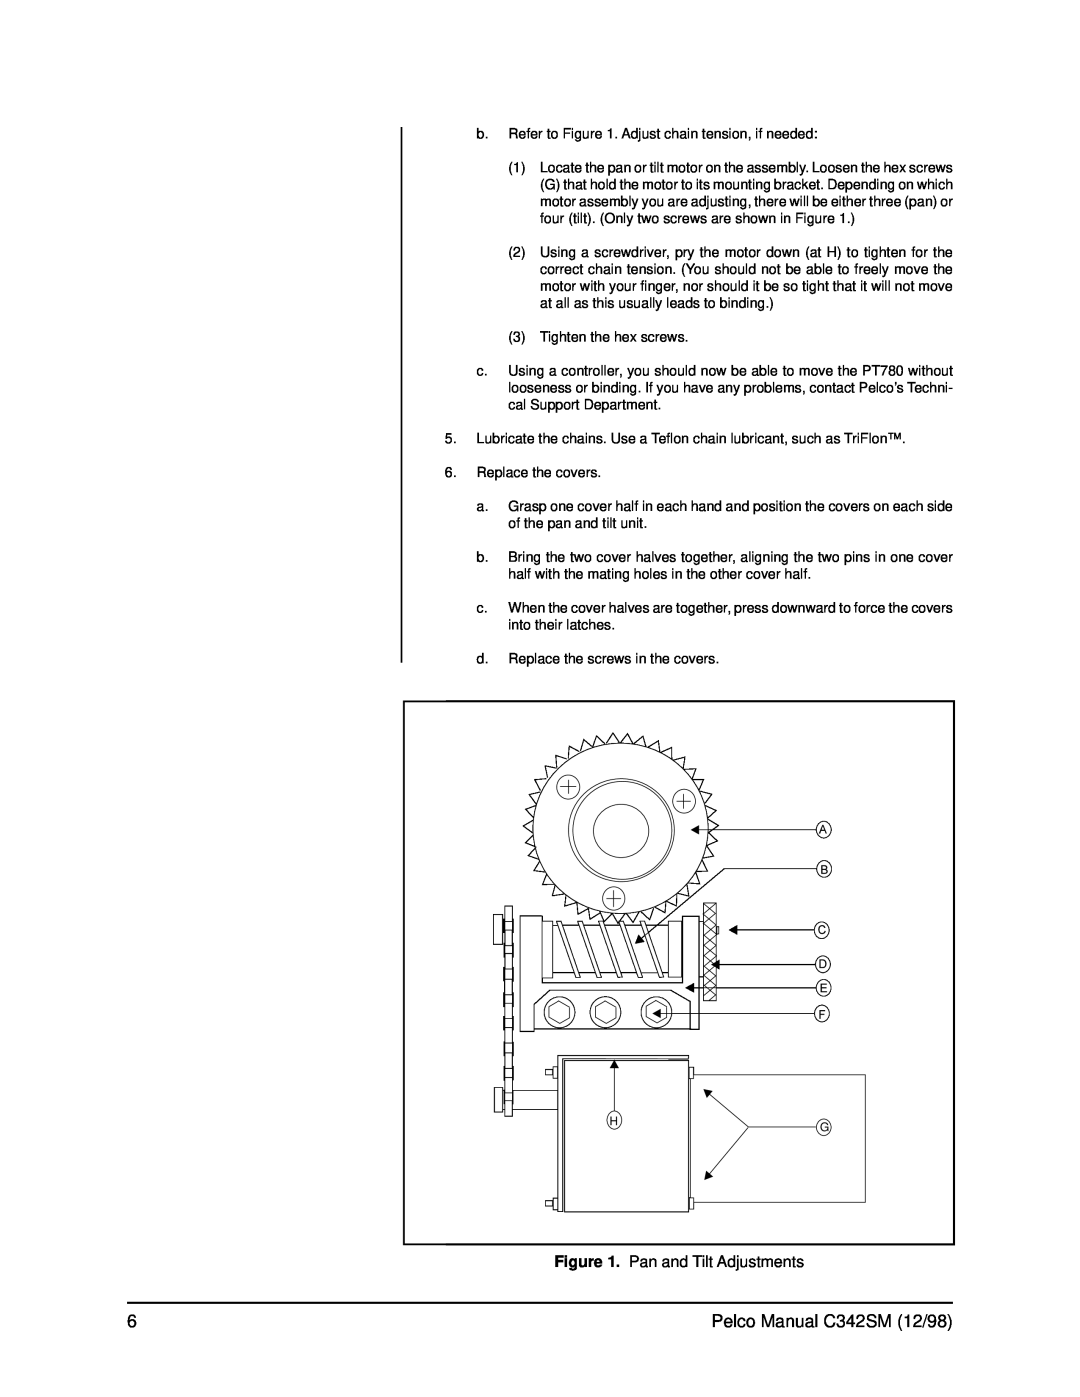 Pelco PT780 service manual Pan and Tilt Adjustments, Pelco Manual C342SM 12/98 